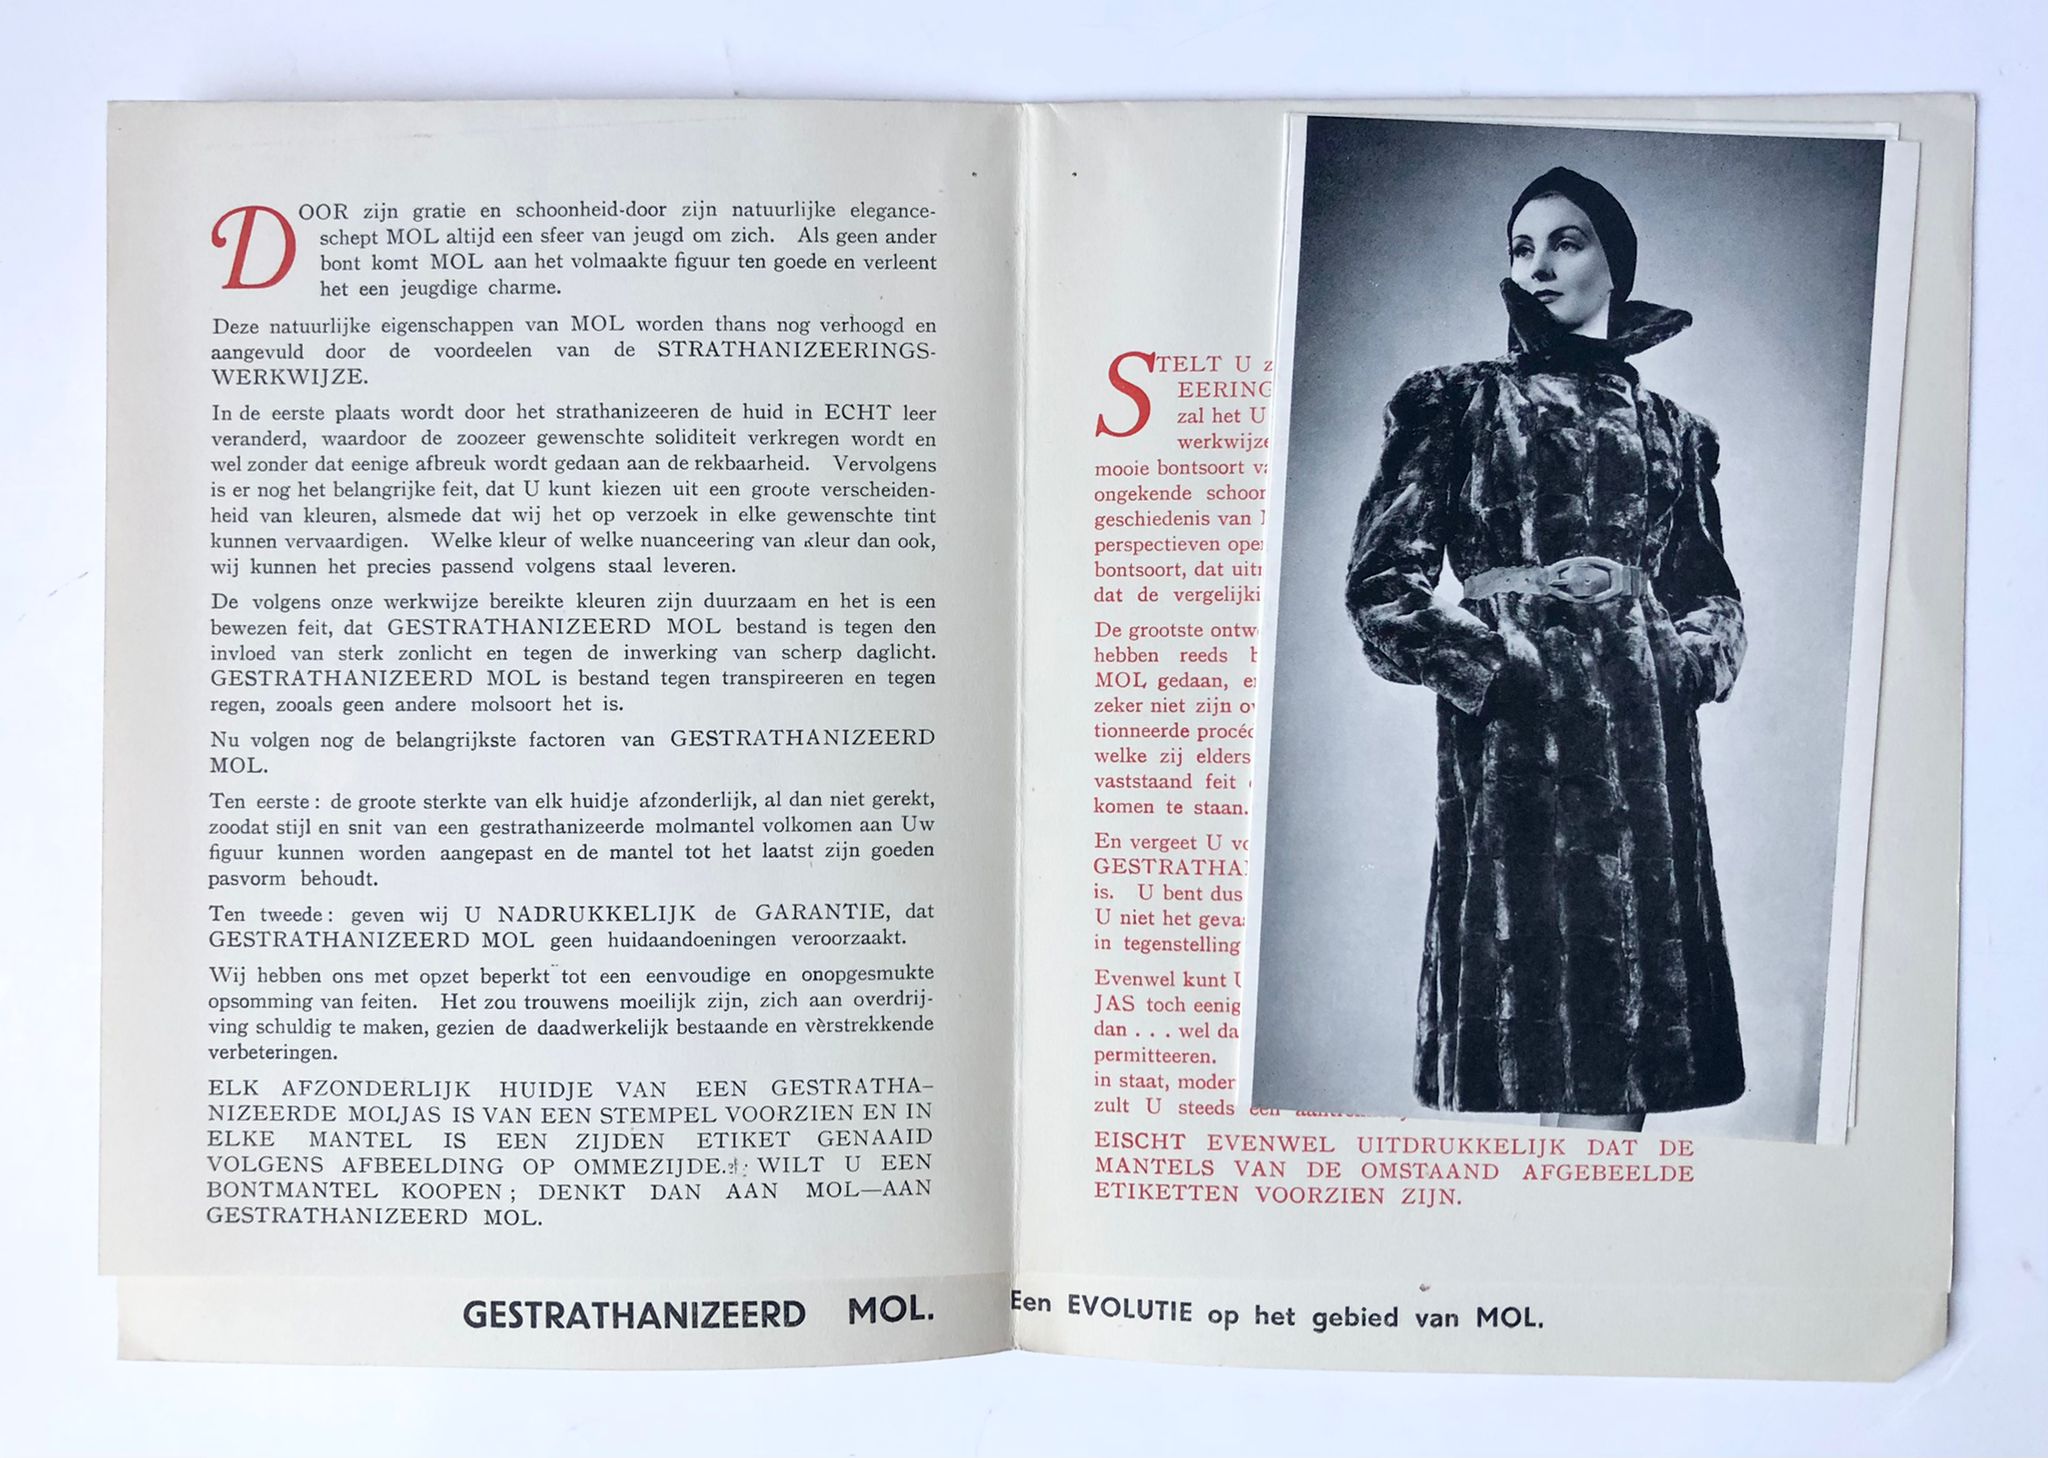 [Printed publication, fur trade] Brochure 'Gestrathanizeerd mol'. 8 pp, printed, illustrated.